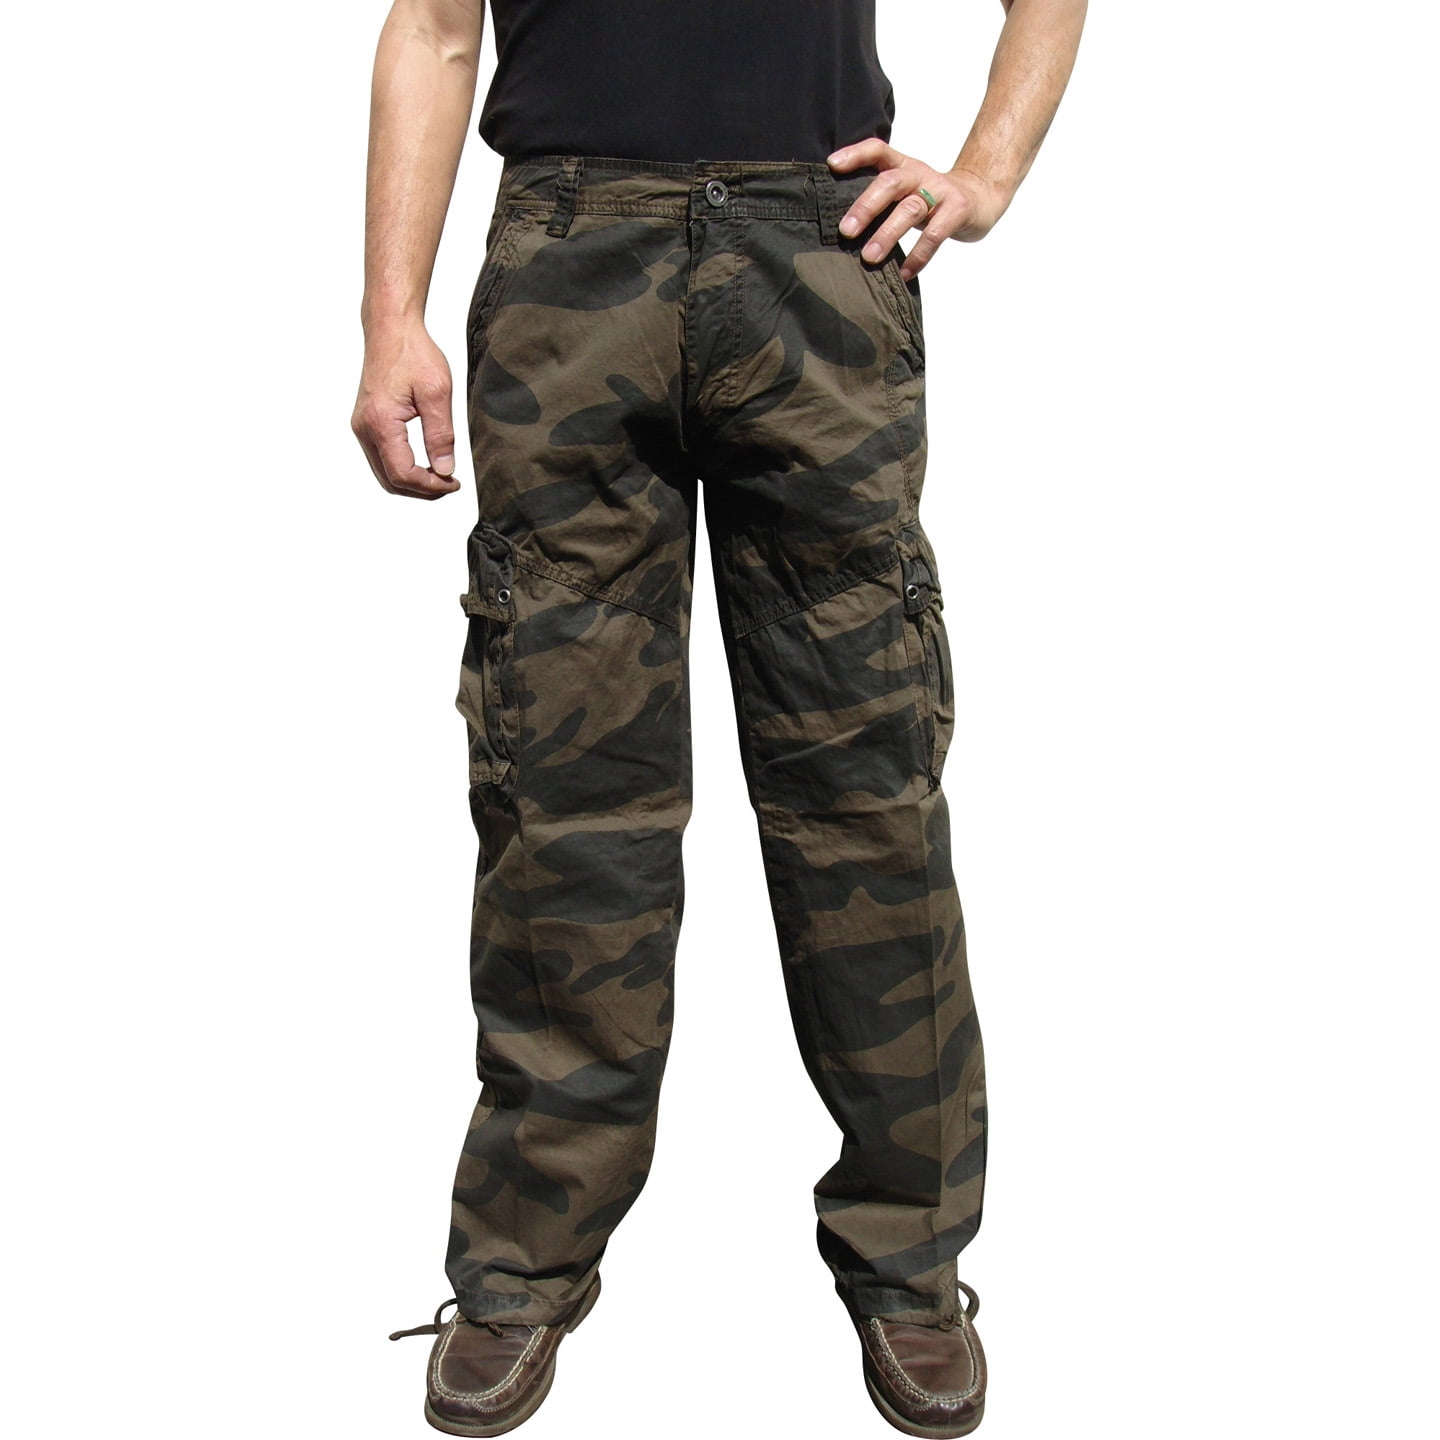 Mens Military-Style Camoflage Cargo Pants #27C1 32x32 Brown - Walmart.com